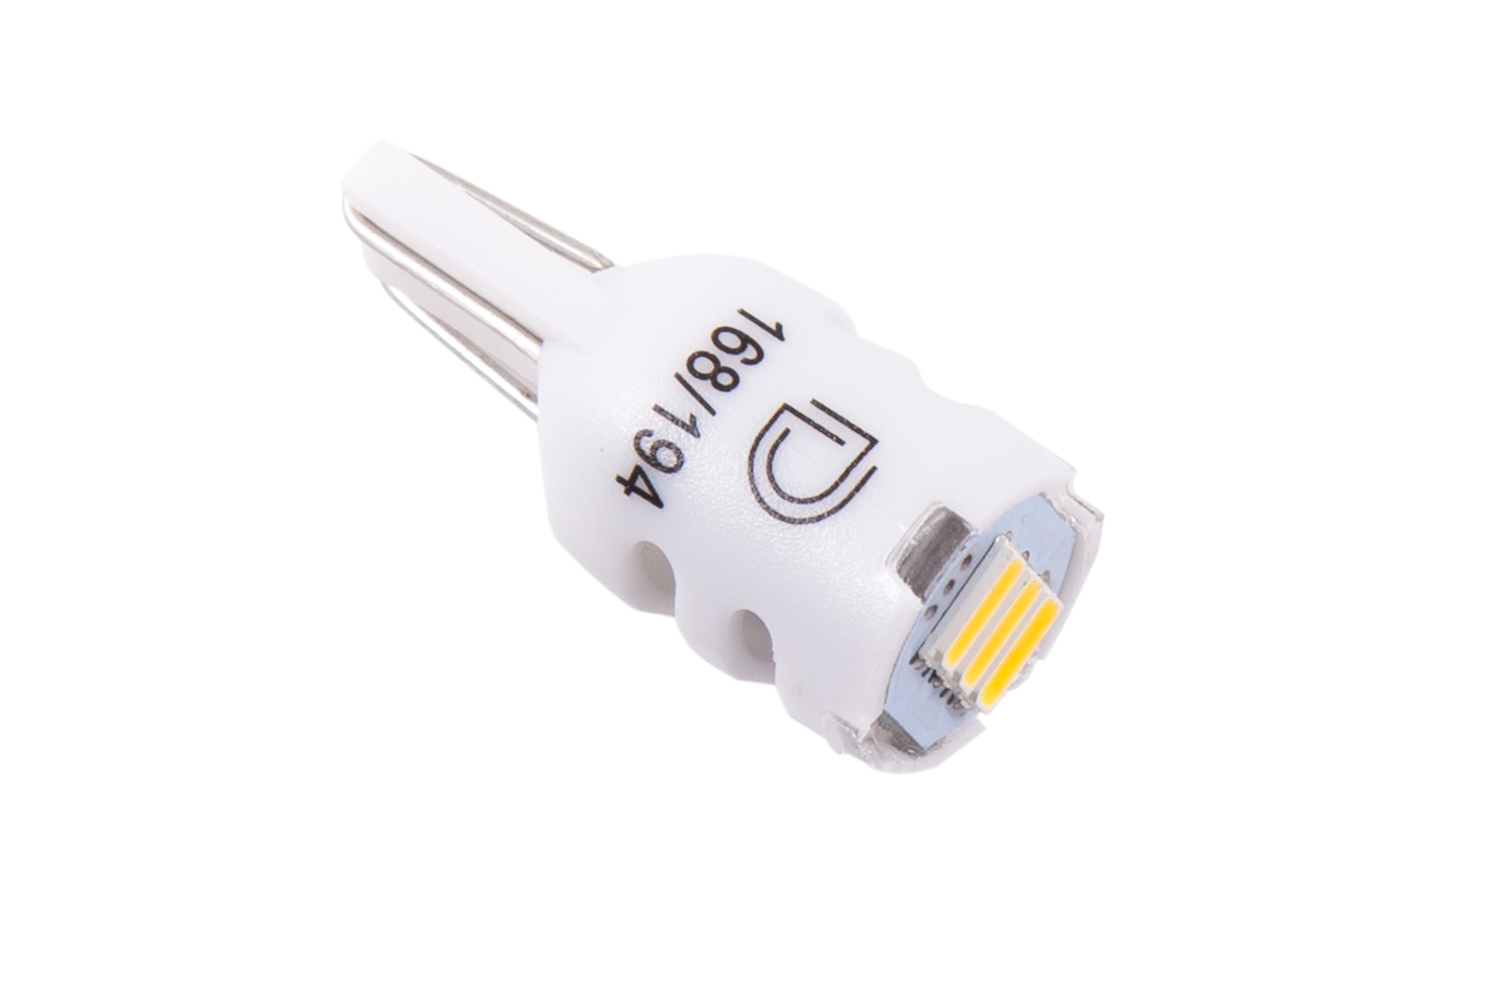 194 LED Bulb HP3 LED Warm White Short Single Diode Dynamics